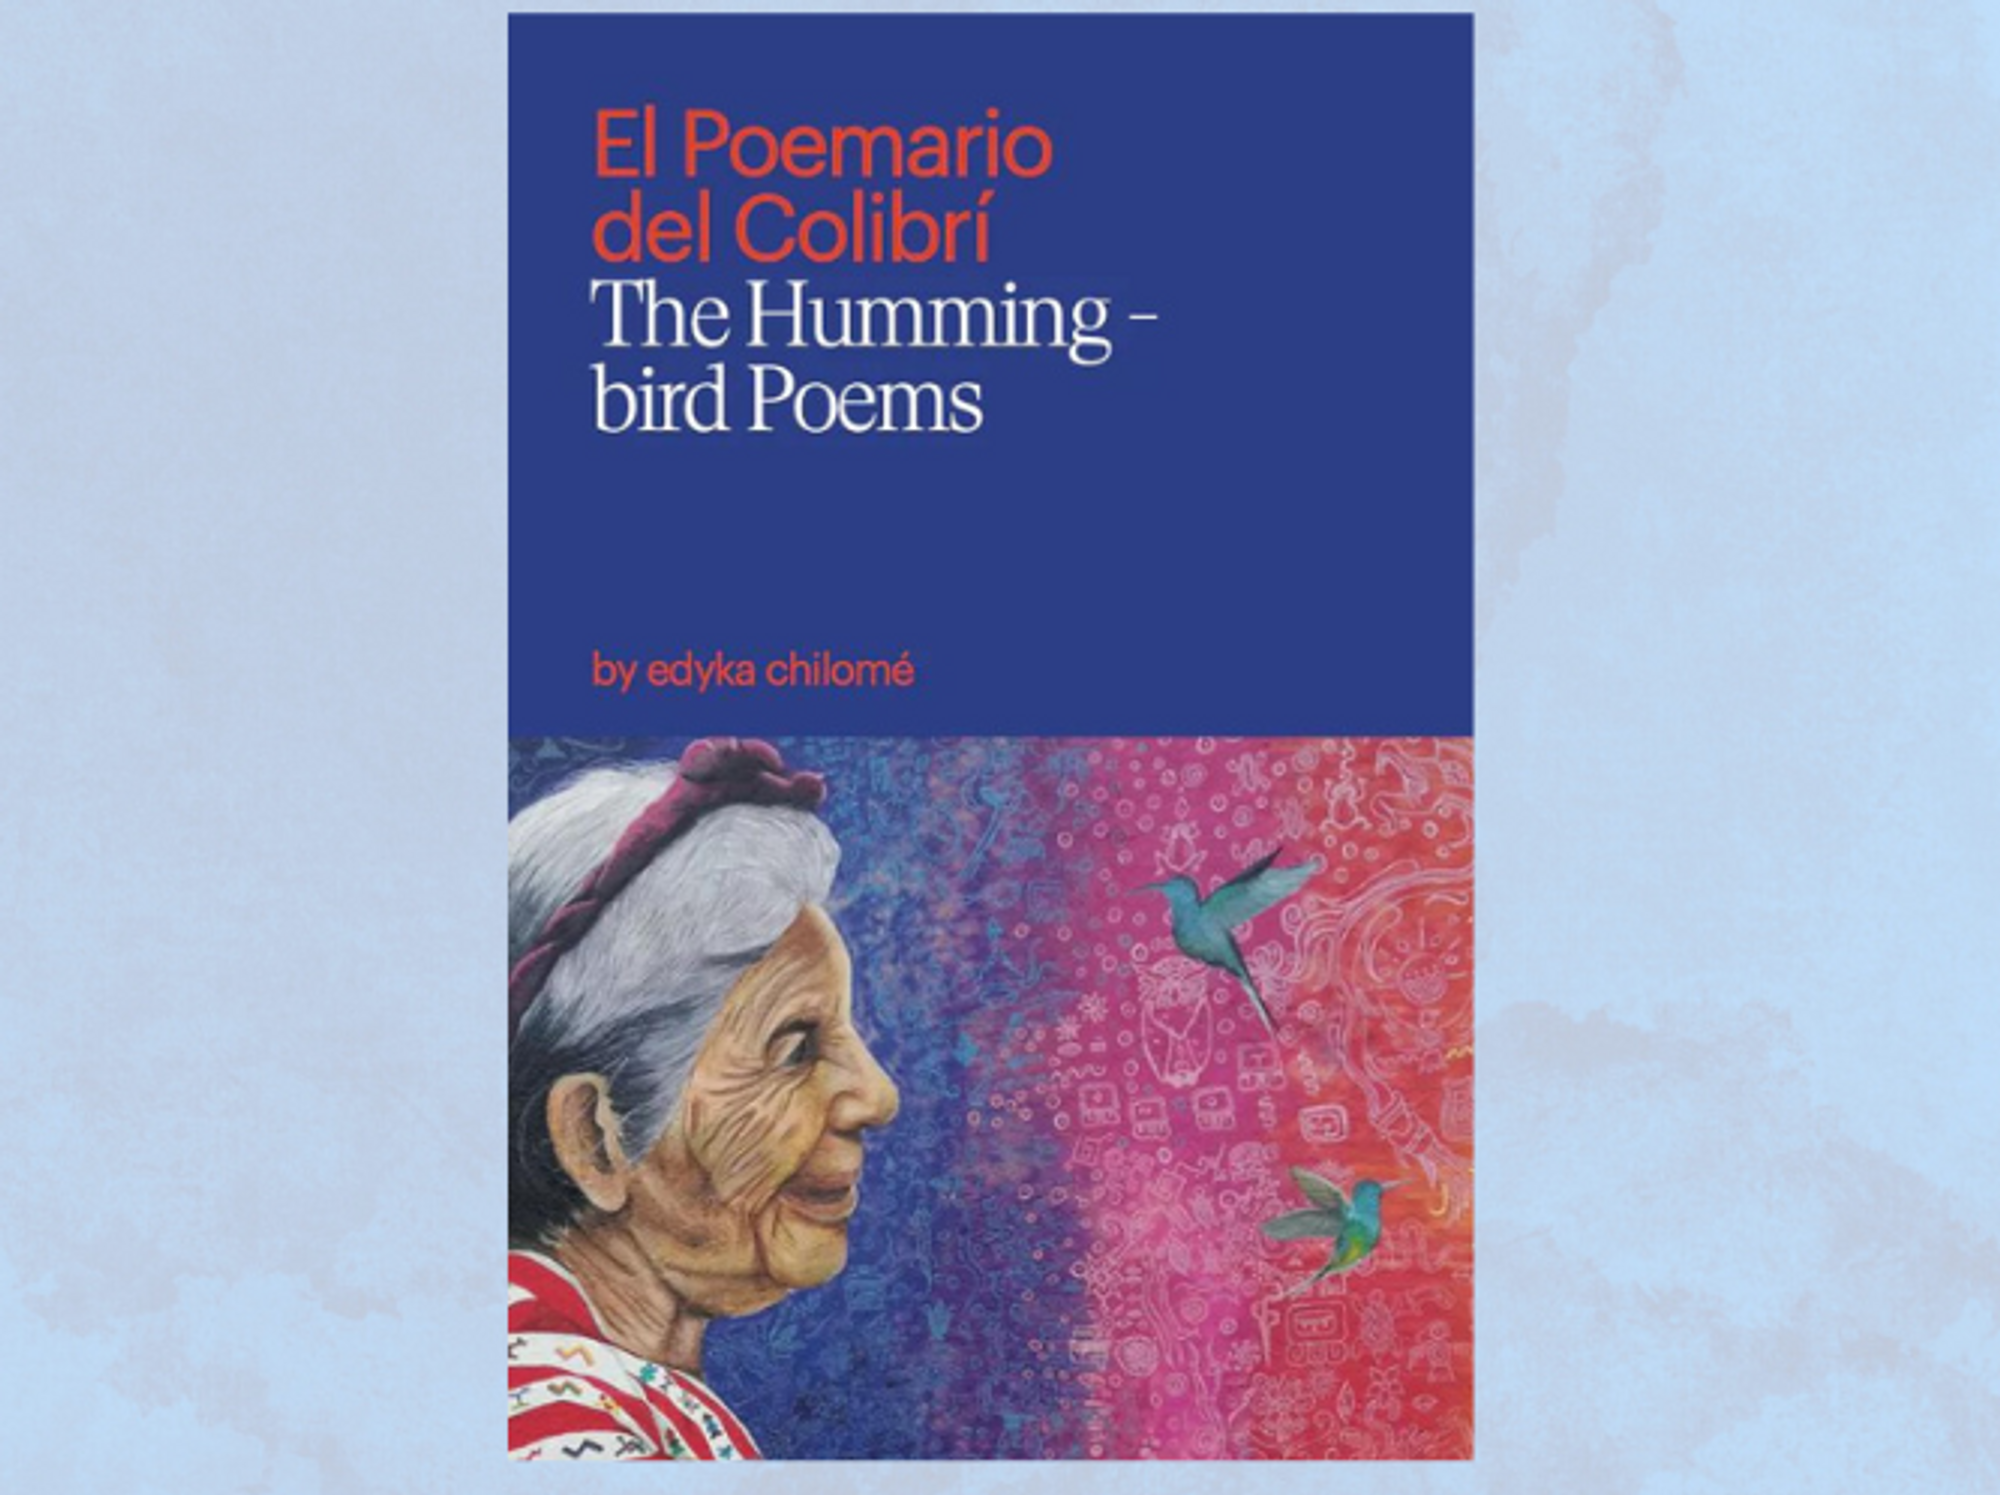 Book cover \u201cEl Poemario del Colibr\u00ed | The Hummingbird Poems\u201d by Edyka Chilom\u00e9